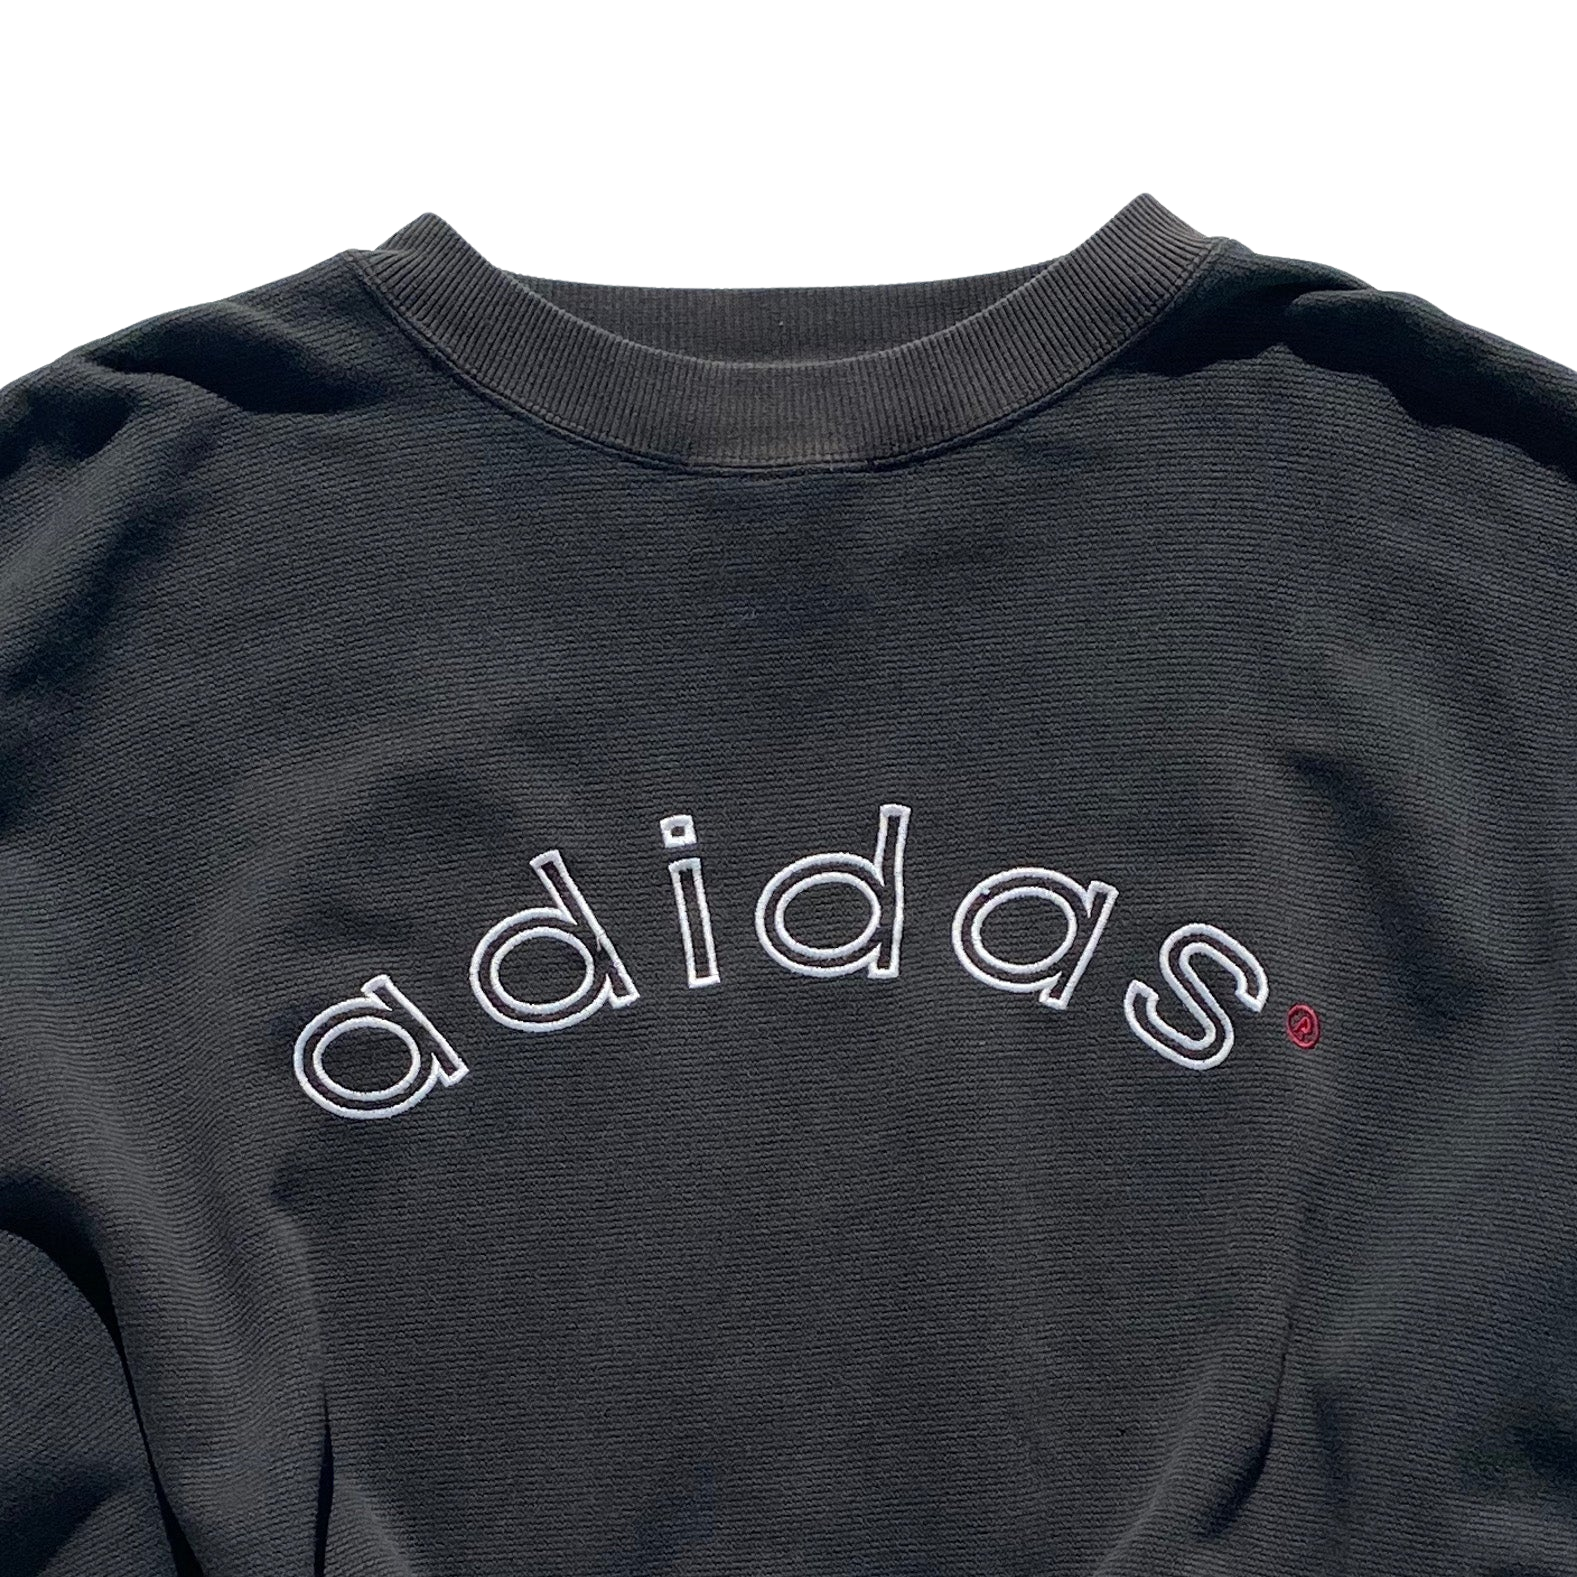 (L) 90s Adidas